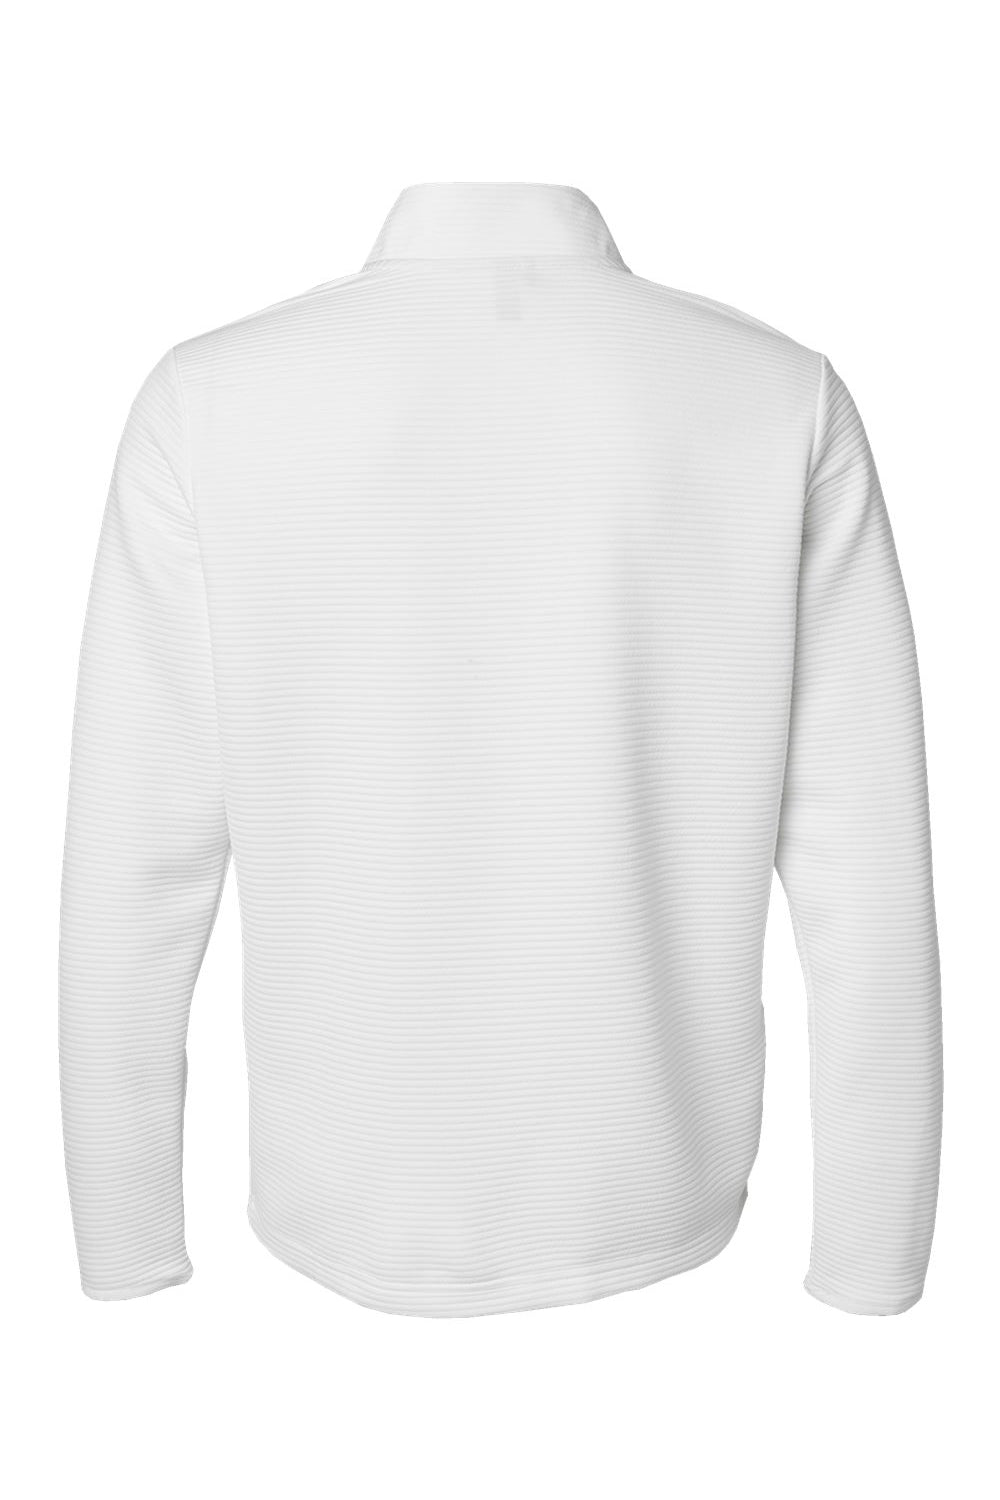 Adidas A588 Mens Spacer 1/4 Zip Sweatshirt Core White Flat Back